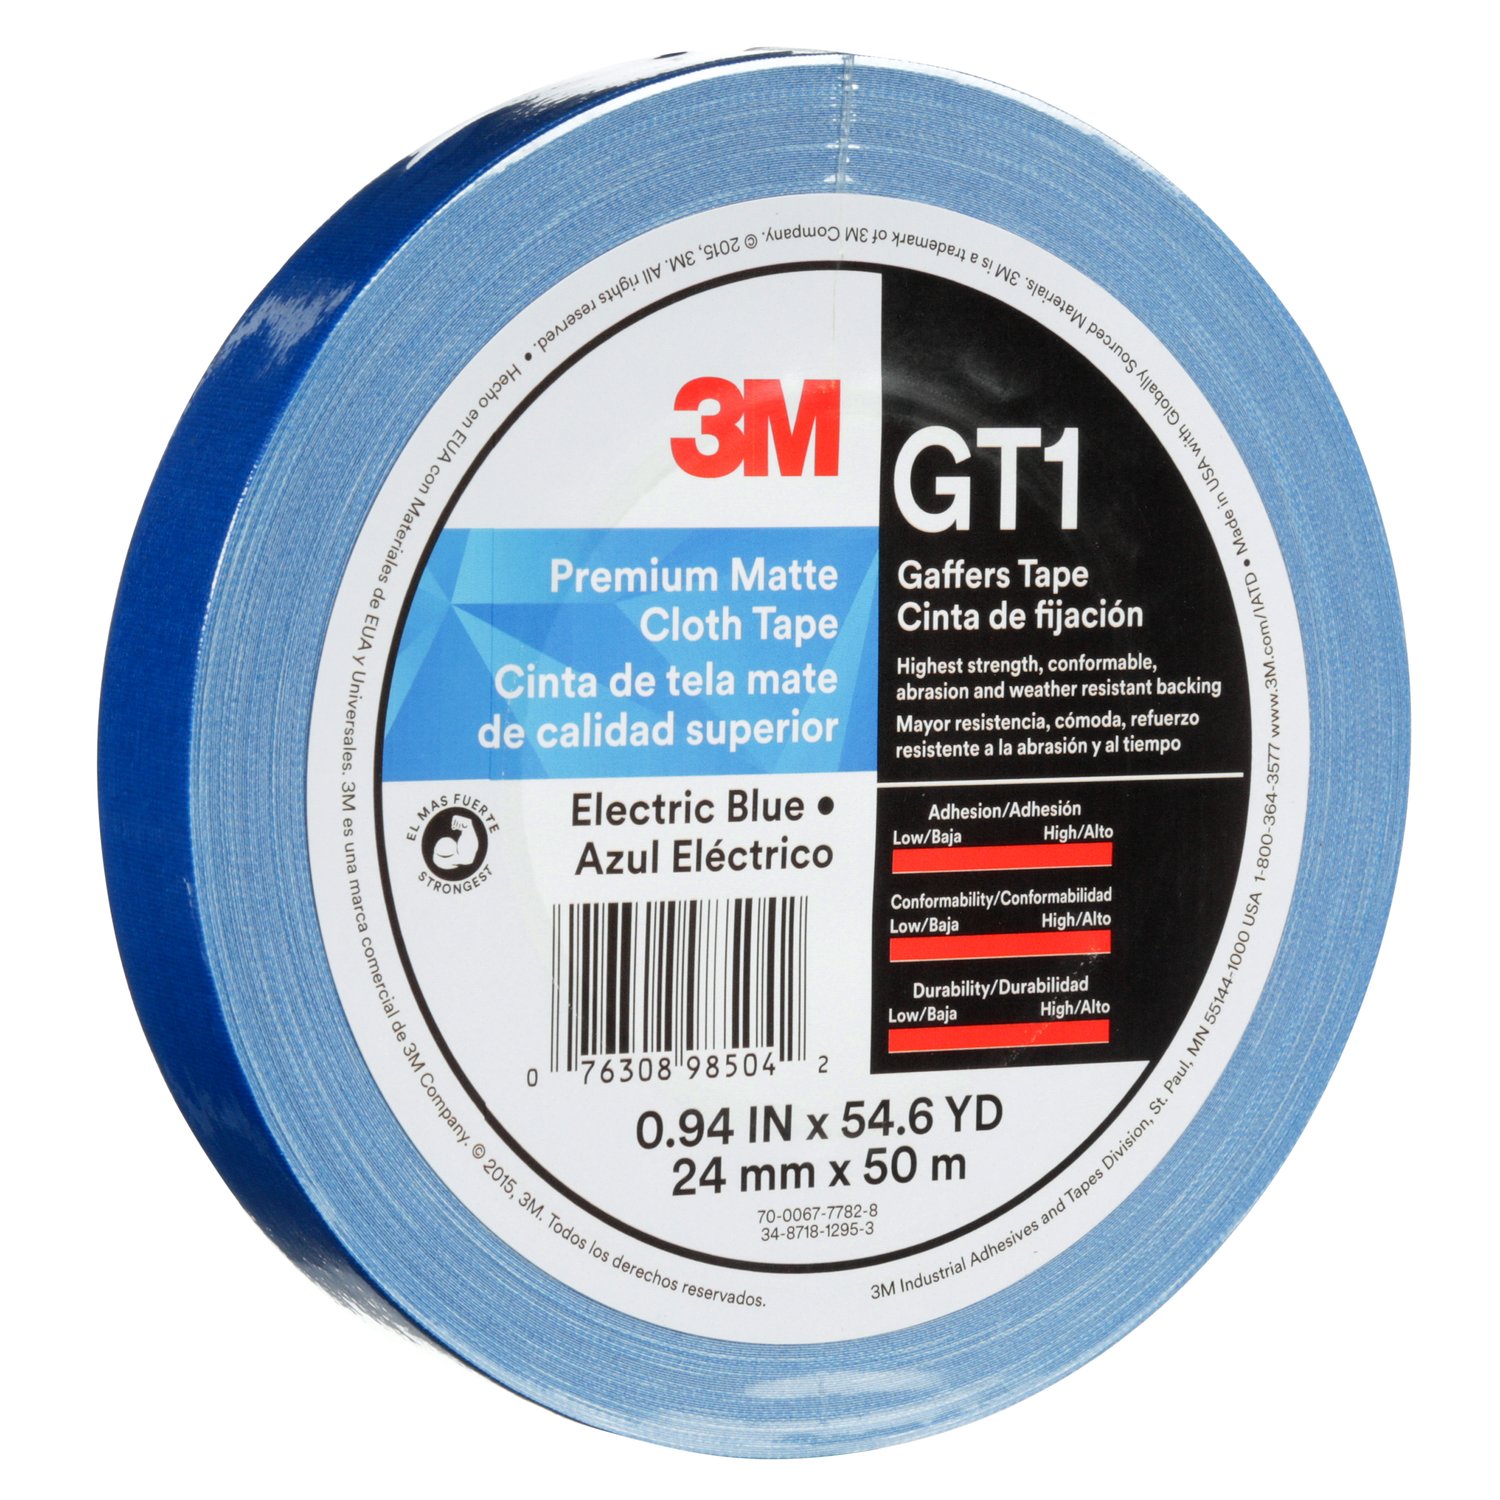 7010336129 - 3M Premium Matte Cloth (Gaffers) Tape GT1, Electric Blue, 24 mm x 50 m,
11 mil, 48/Case